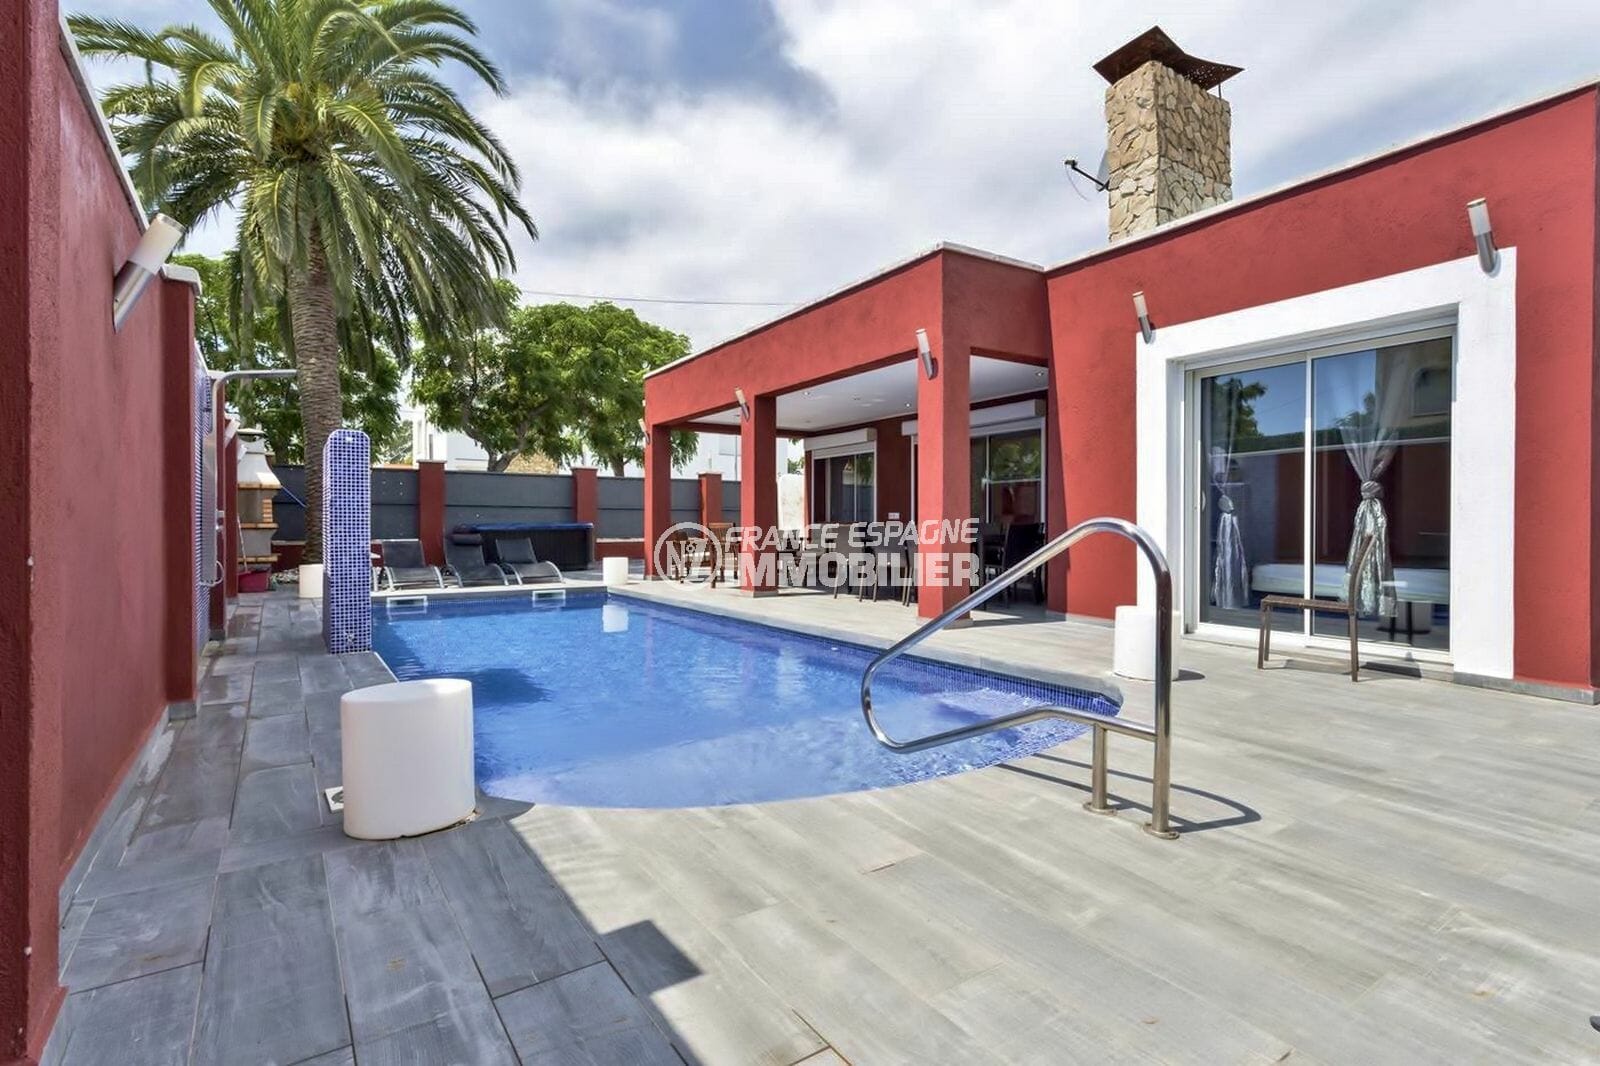 agence immobiliere costa brava: villa 149 m², aperçu piscine & jacuzzi terrasse accès salon